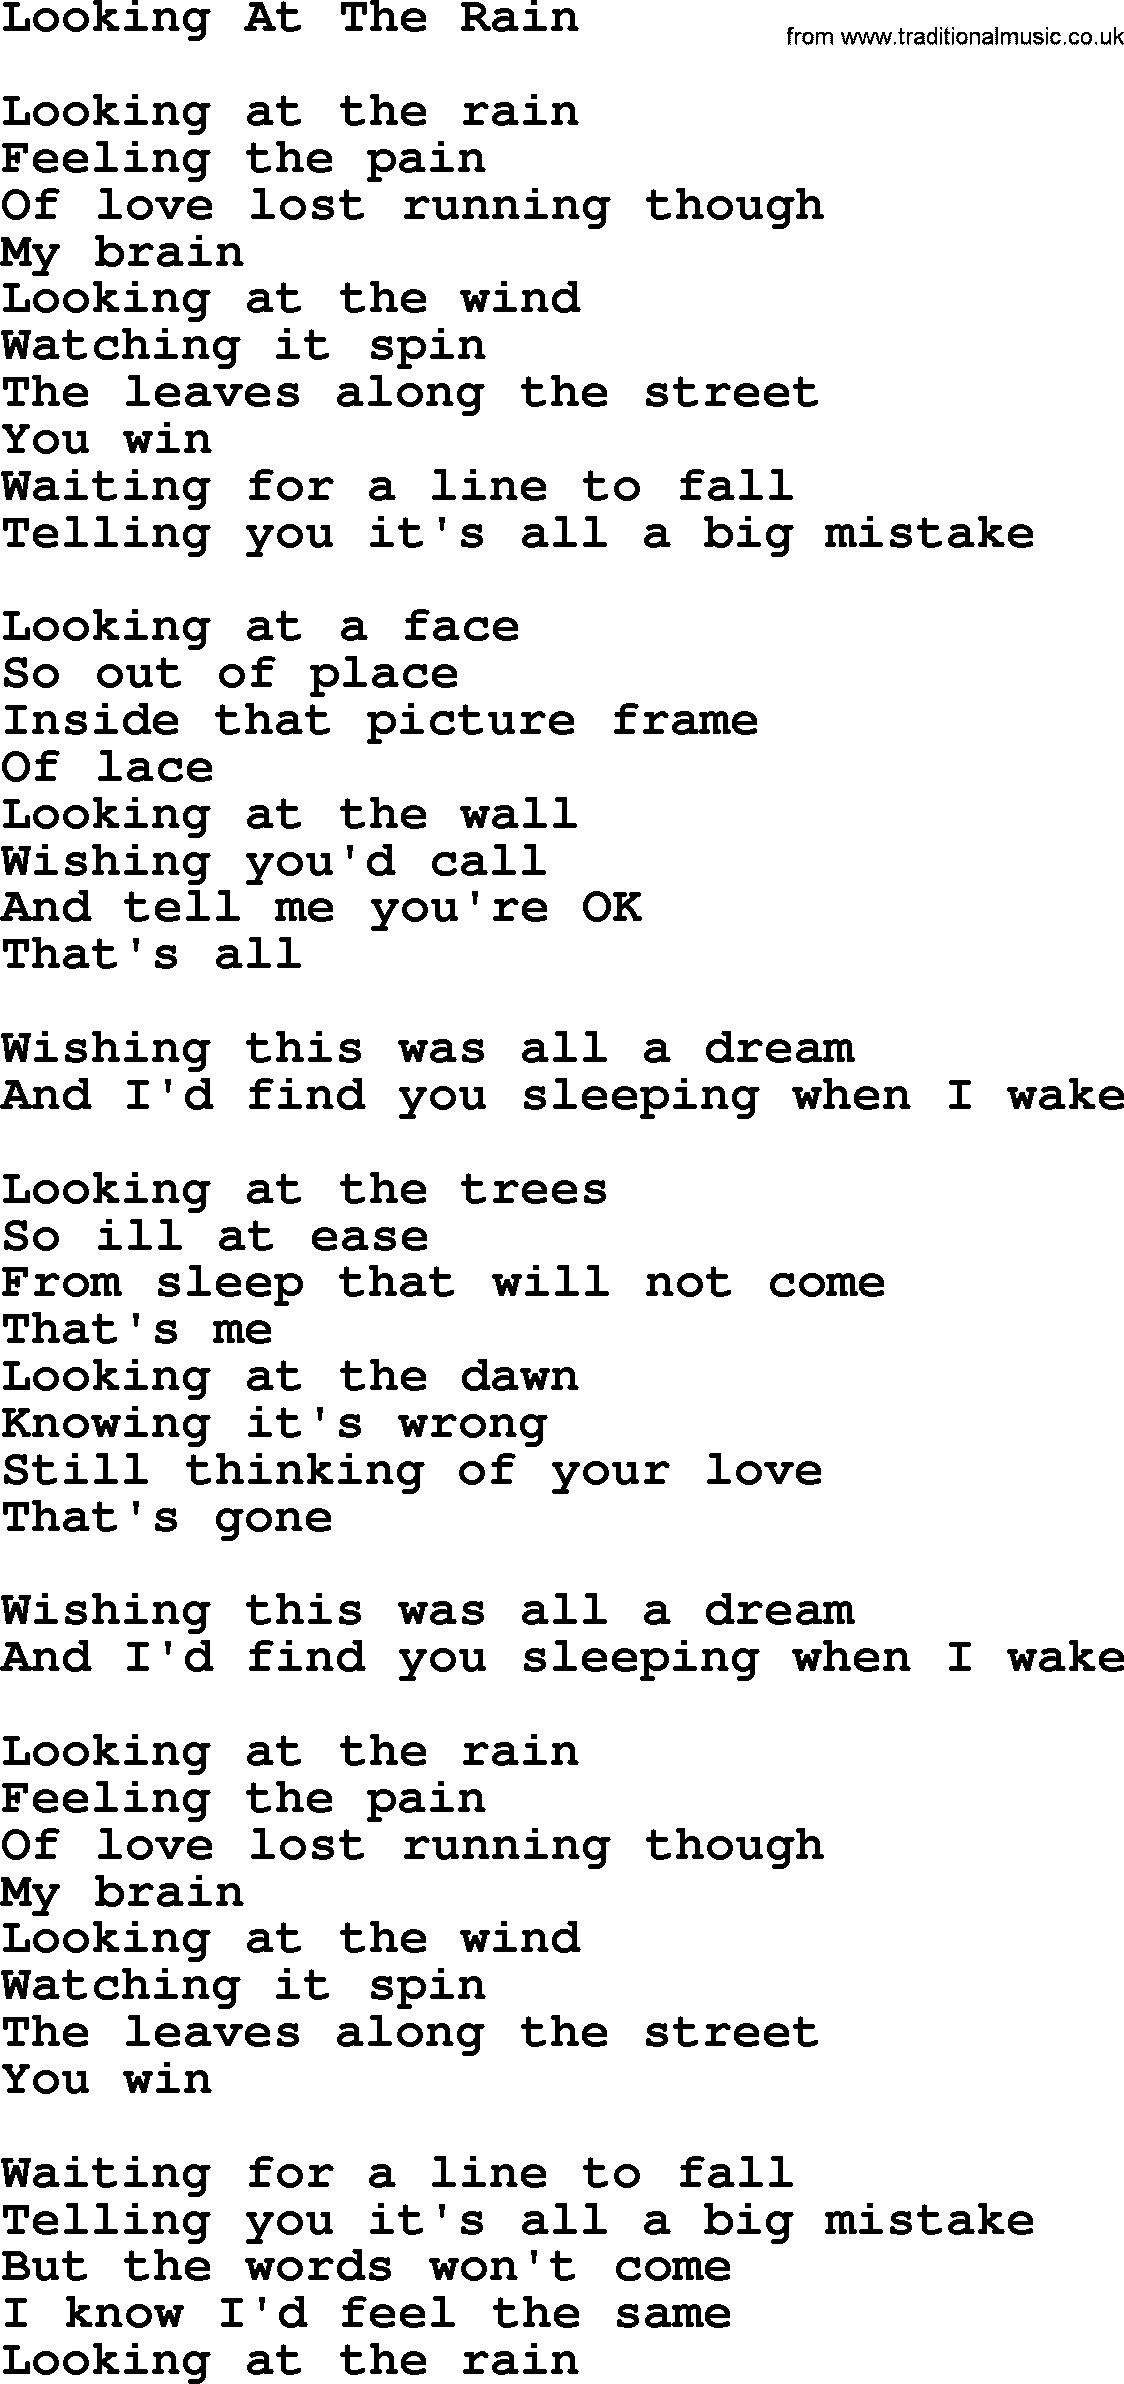 Gordon Lightfoot song Looking At The Rain, lyrics